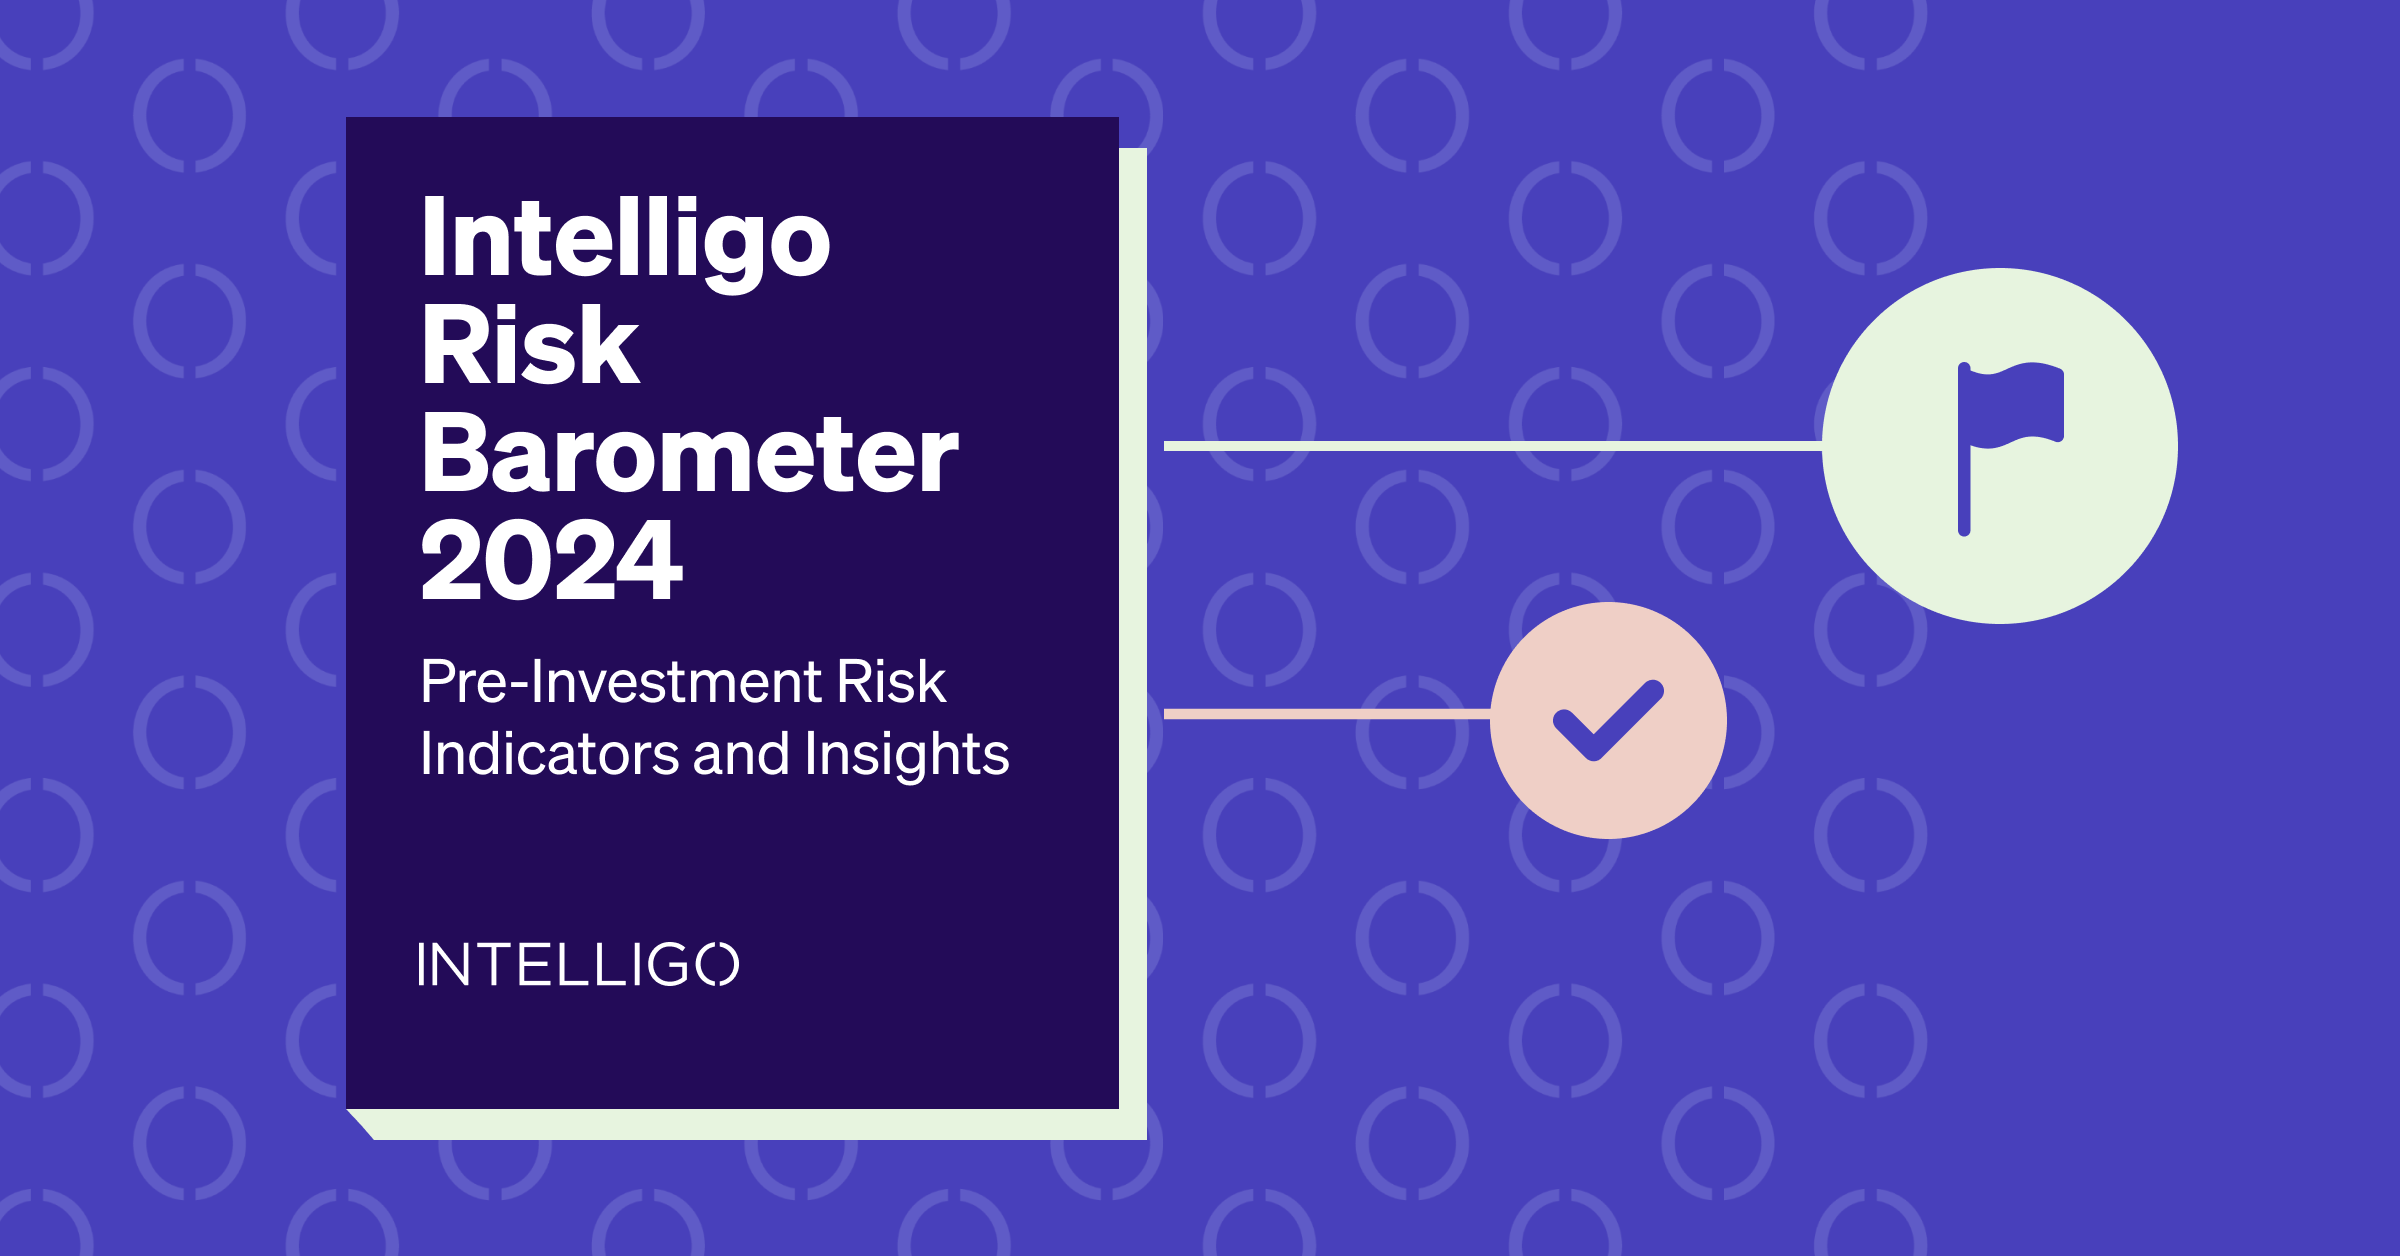 Intelligo Risk Barometer 2024 Report